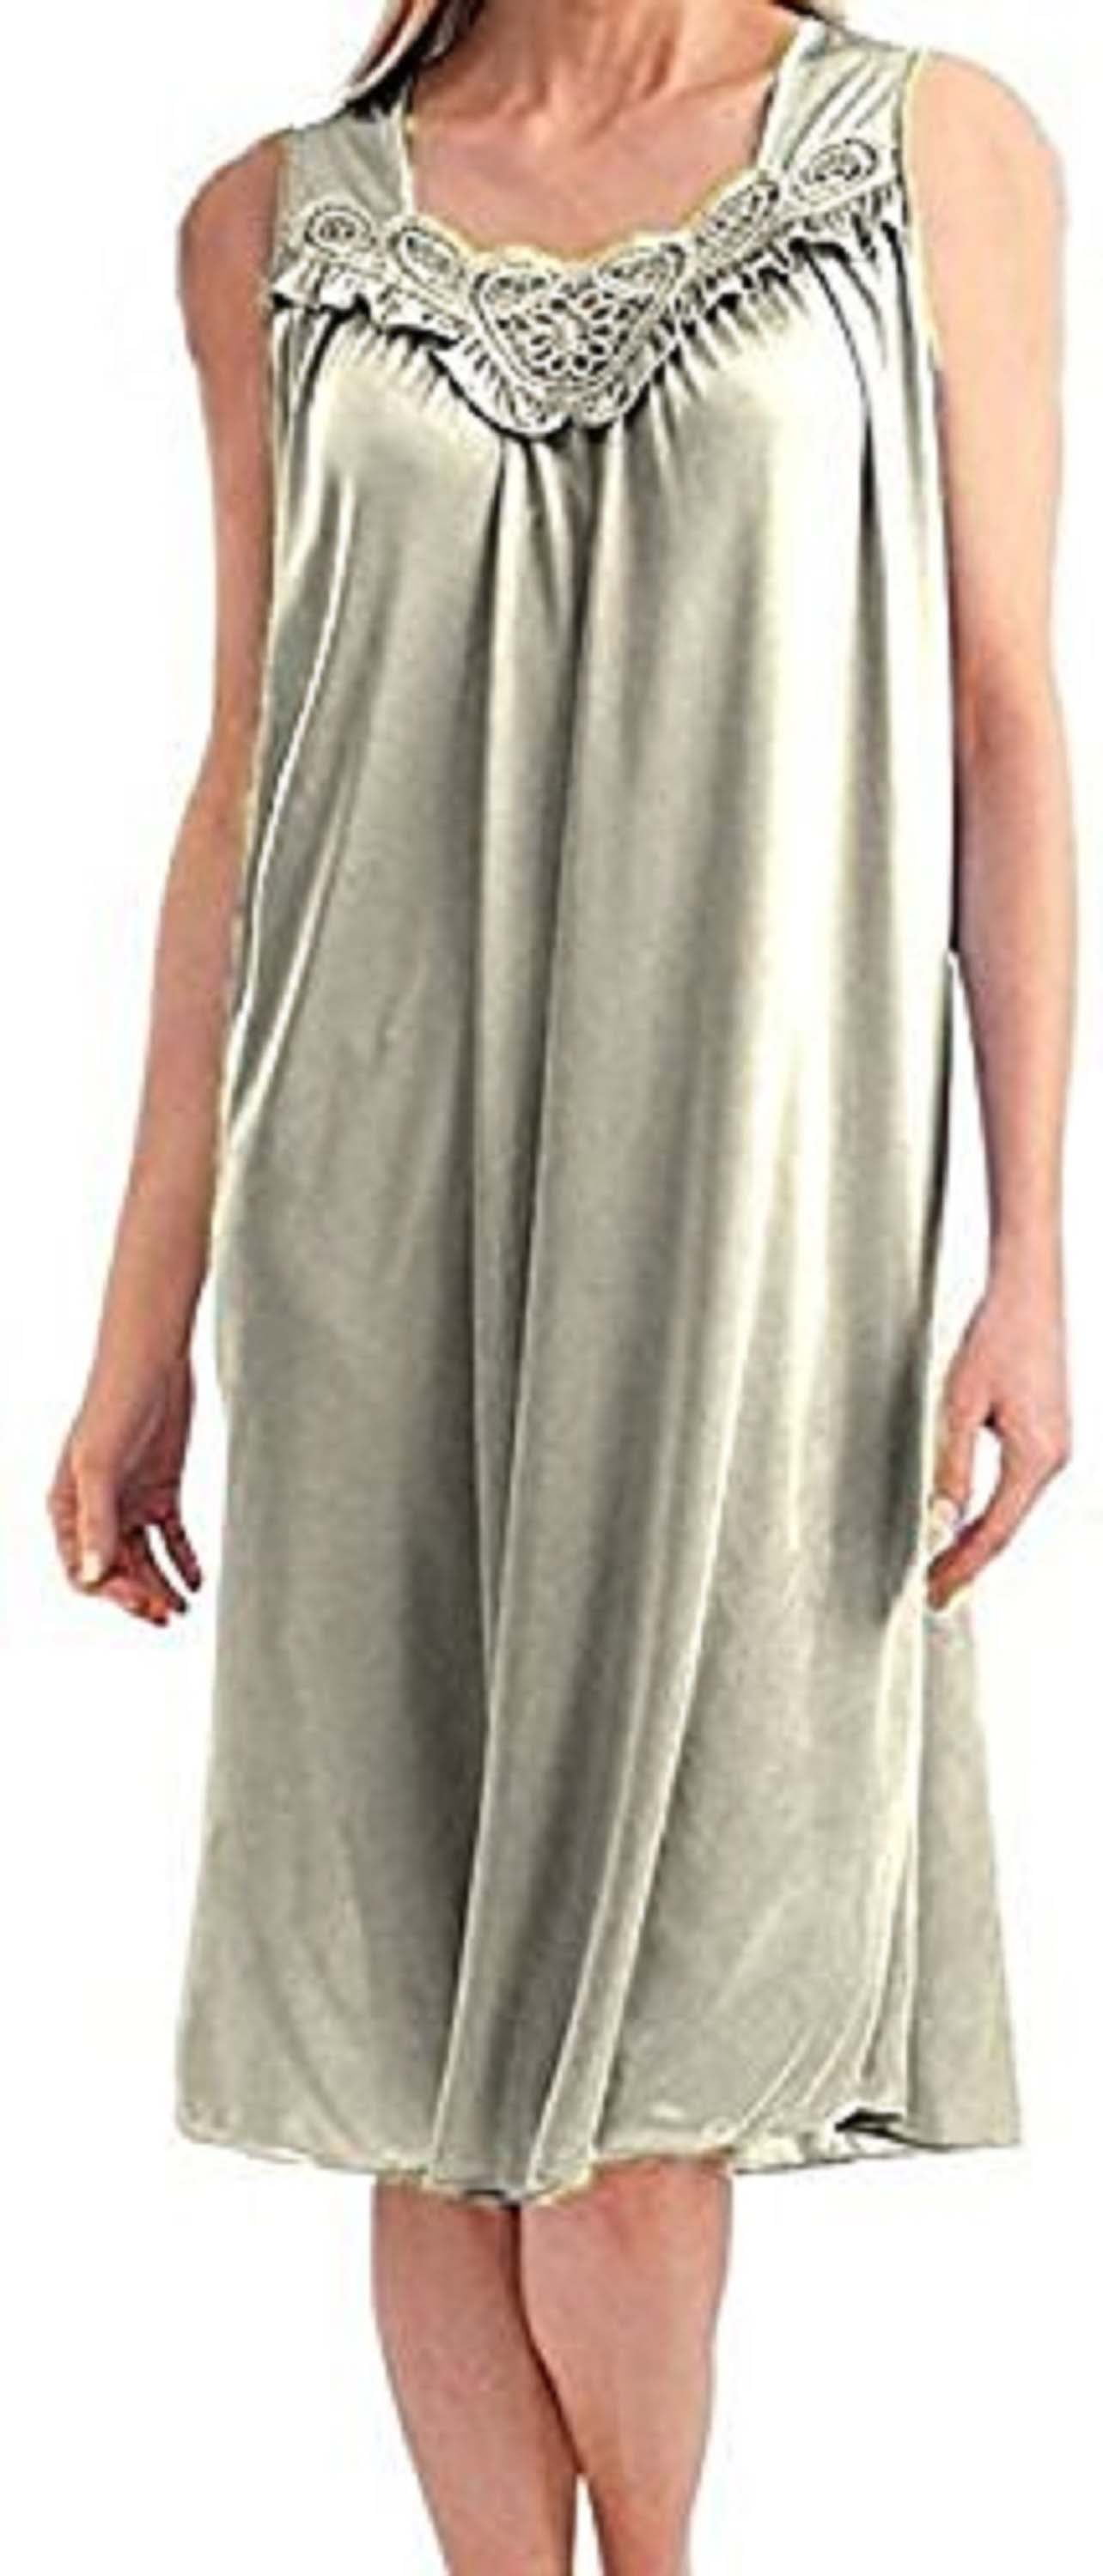 Ezi Womens Plus Satin Silk Sleeveless Lingerie Nightgowns